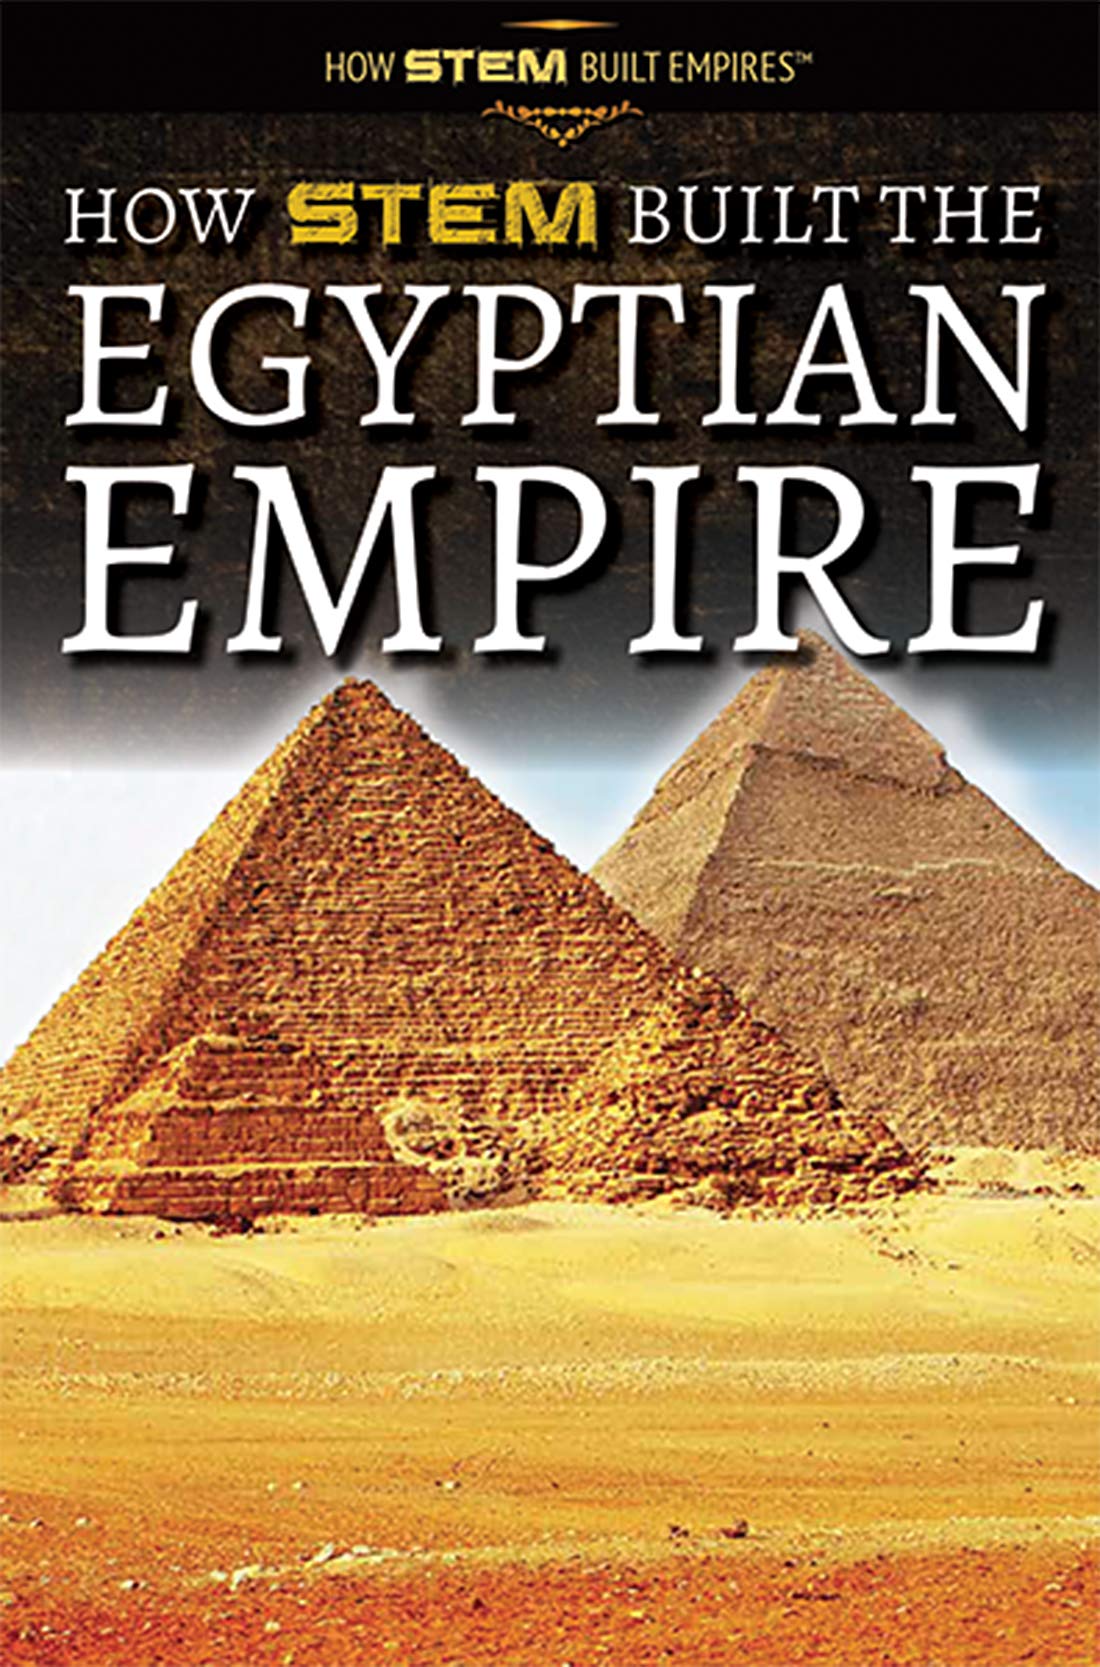 How STEM Built the Egyptian Empire book cover.